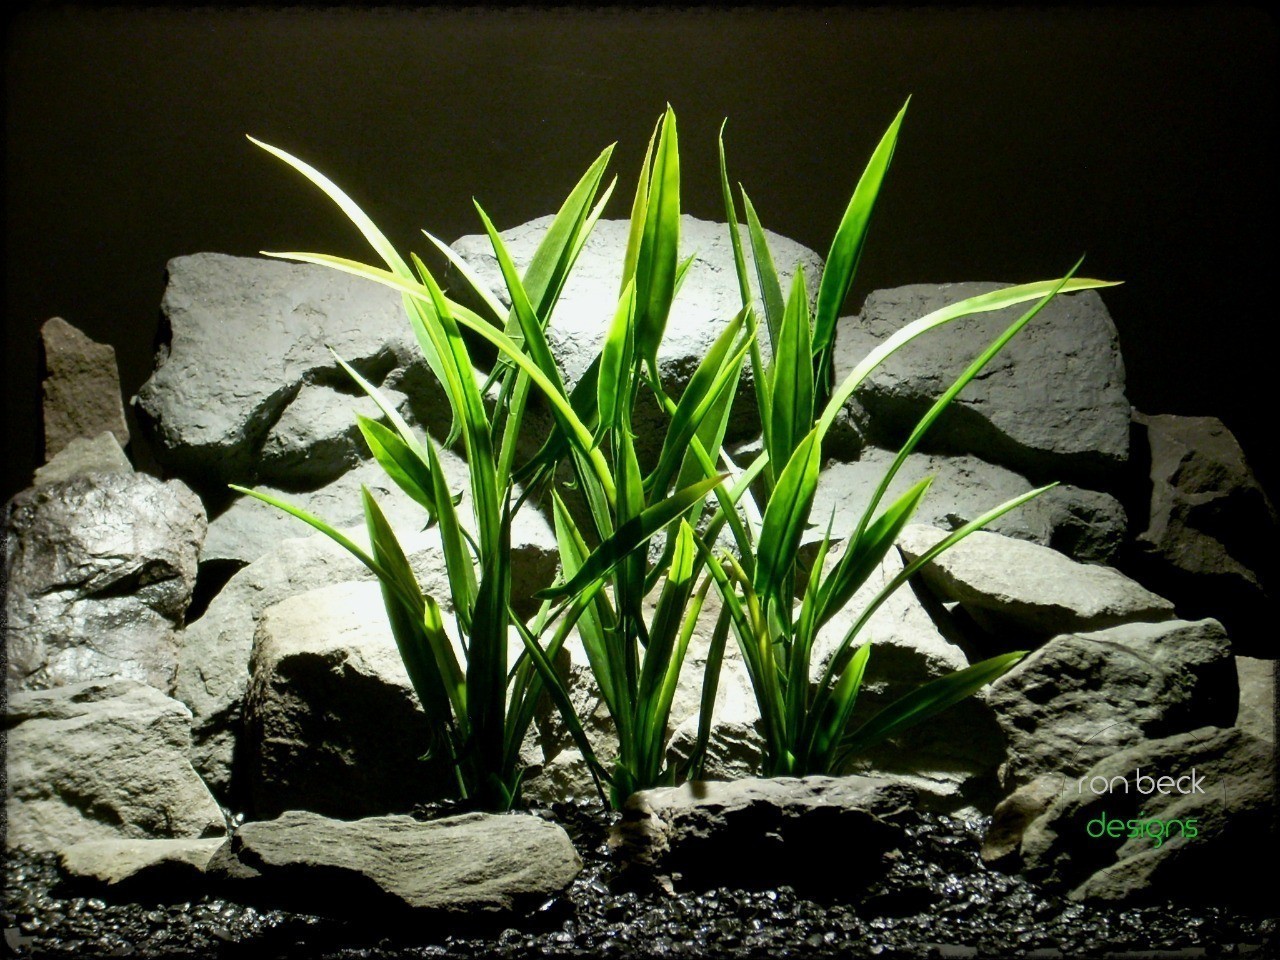 artificial aquarium plants: arrowhead grass plot from ron beck designs, 04 2018